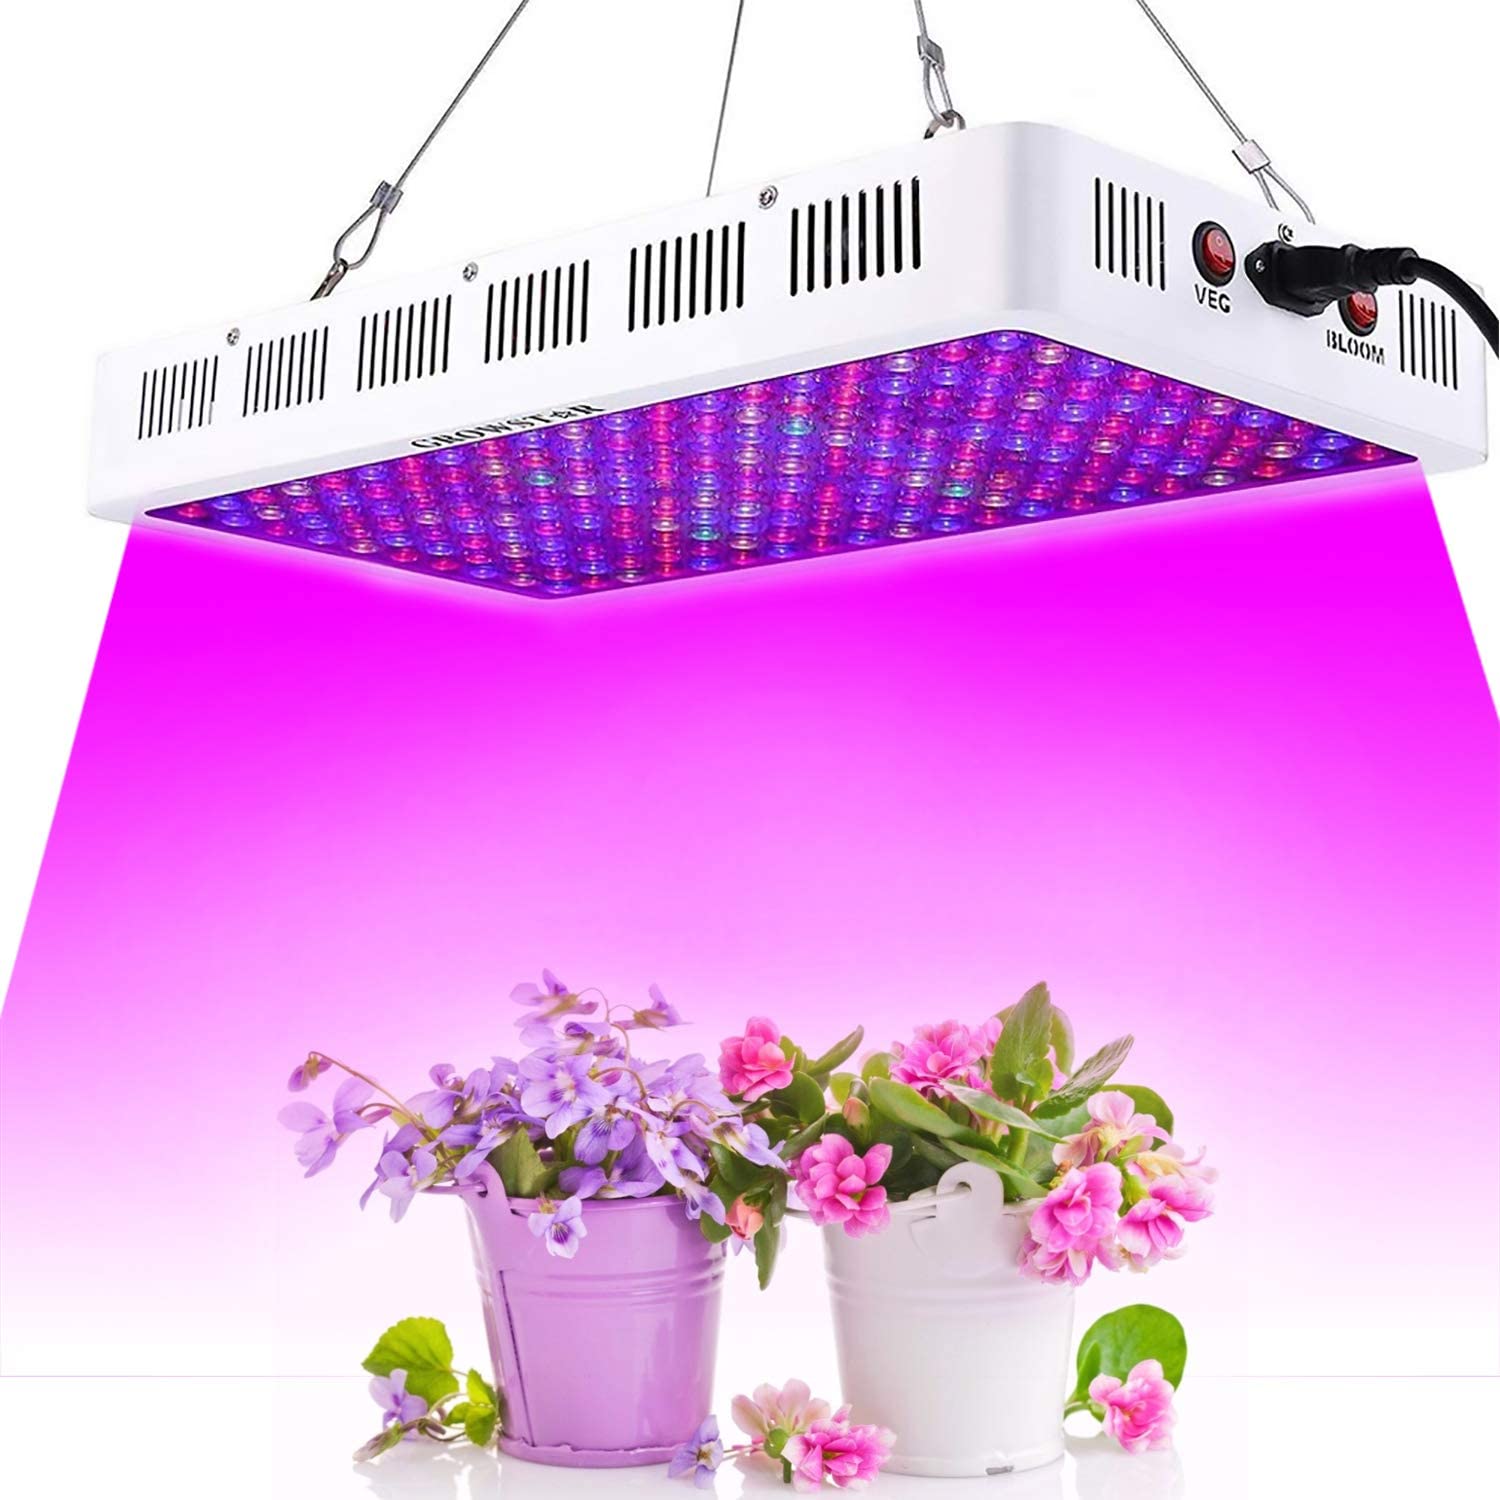 Growstar 1000W LED Plant Light